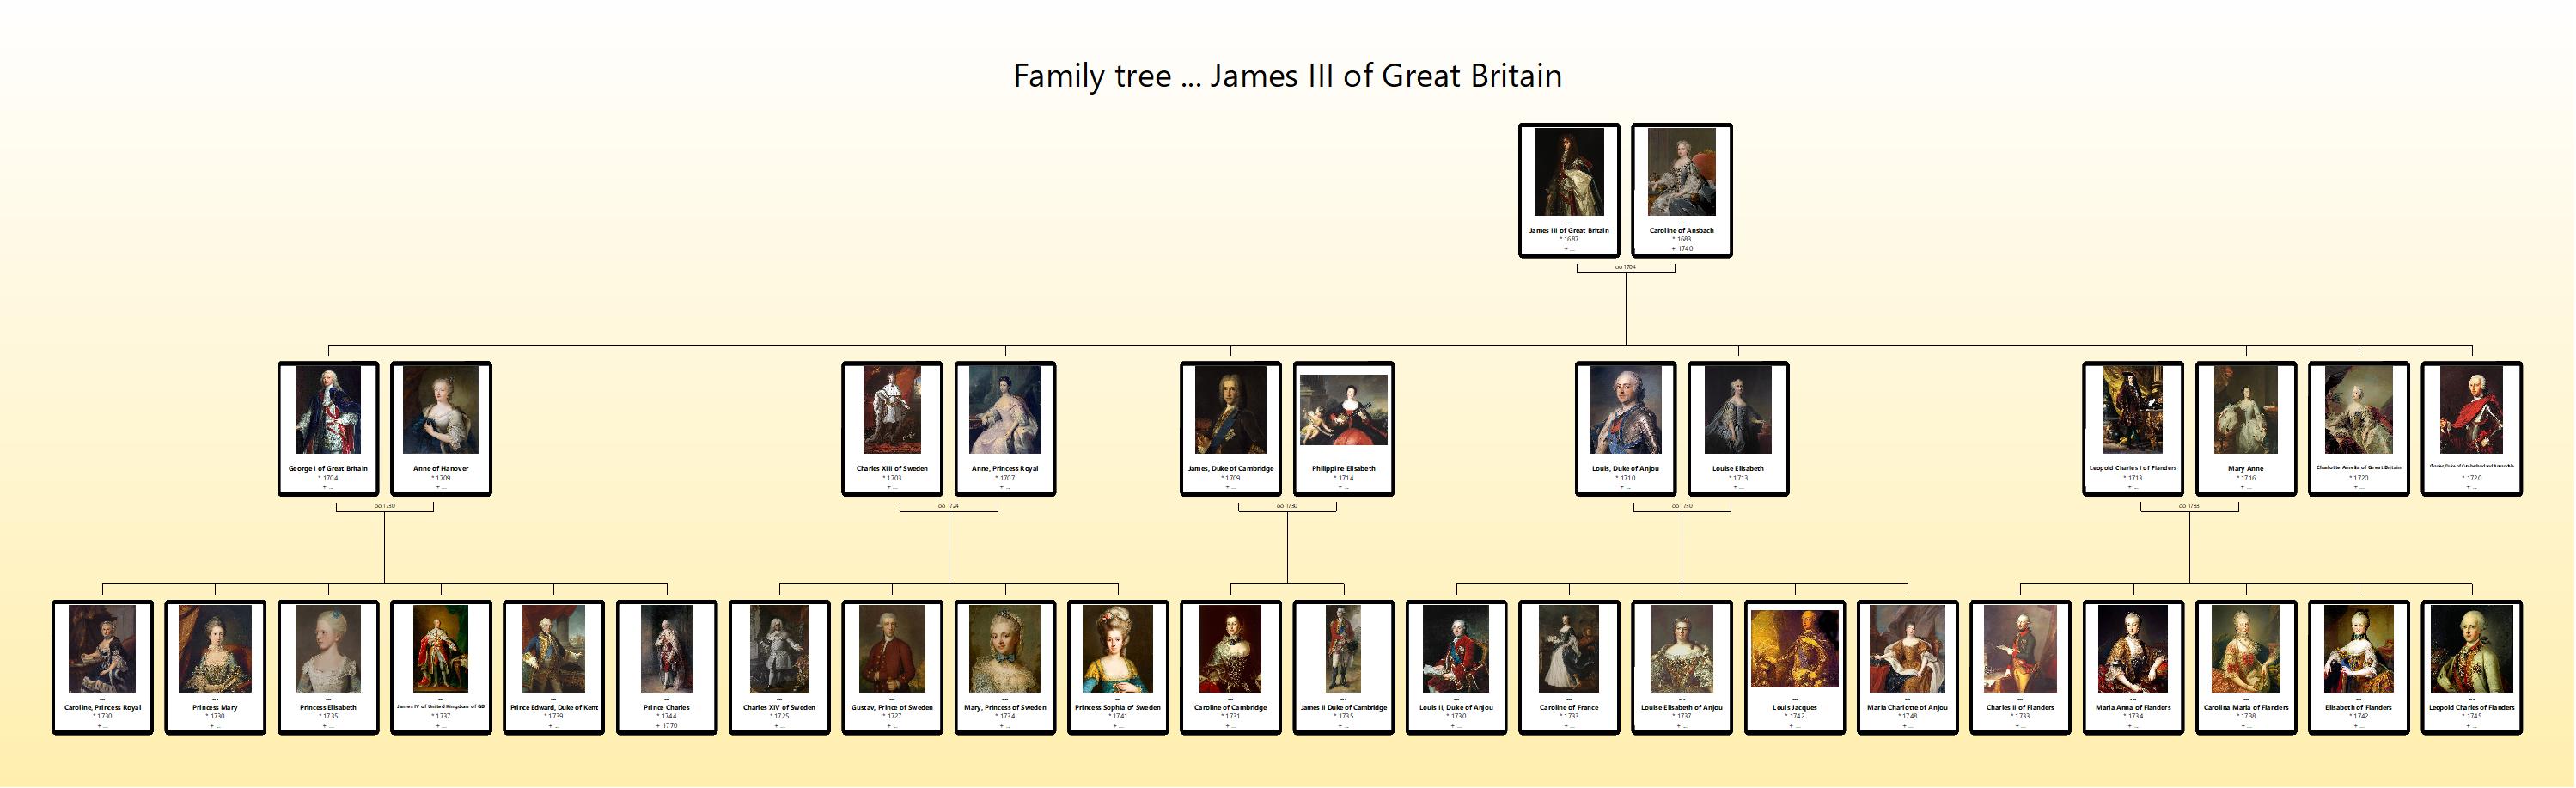 James III family tree.jpg